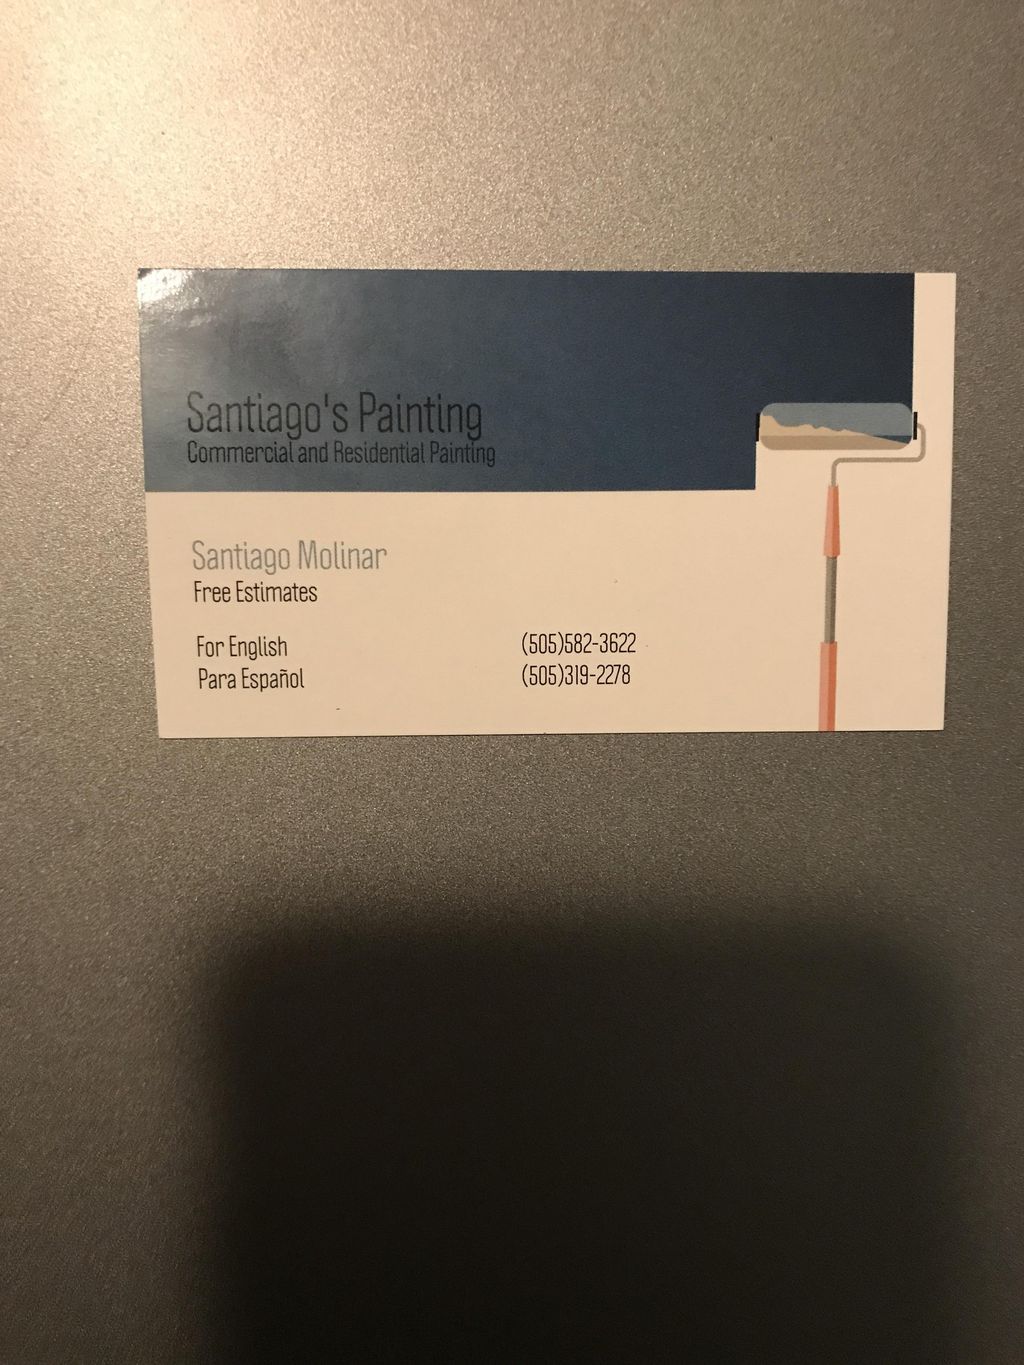 Santiago's Painting LLC.